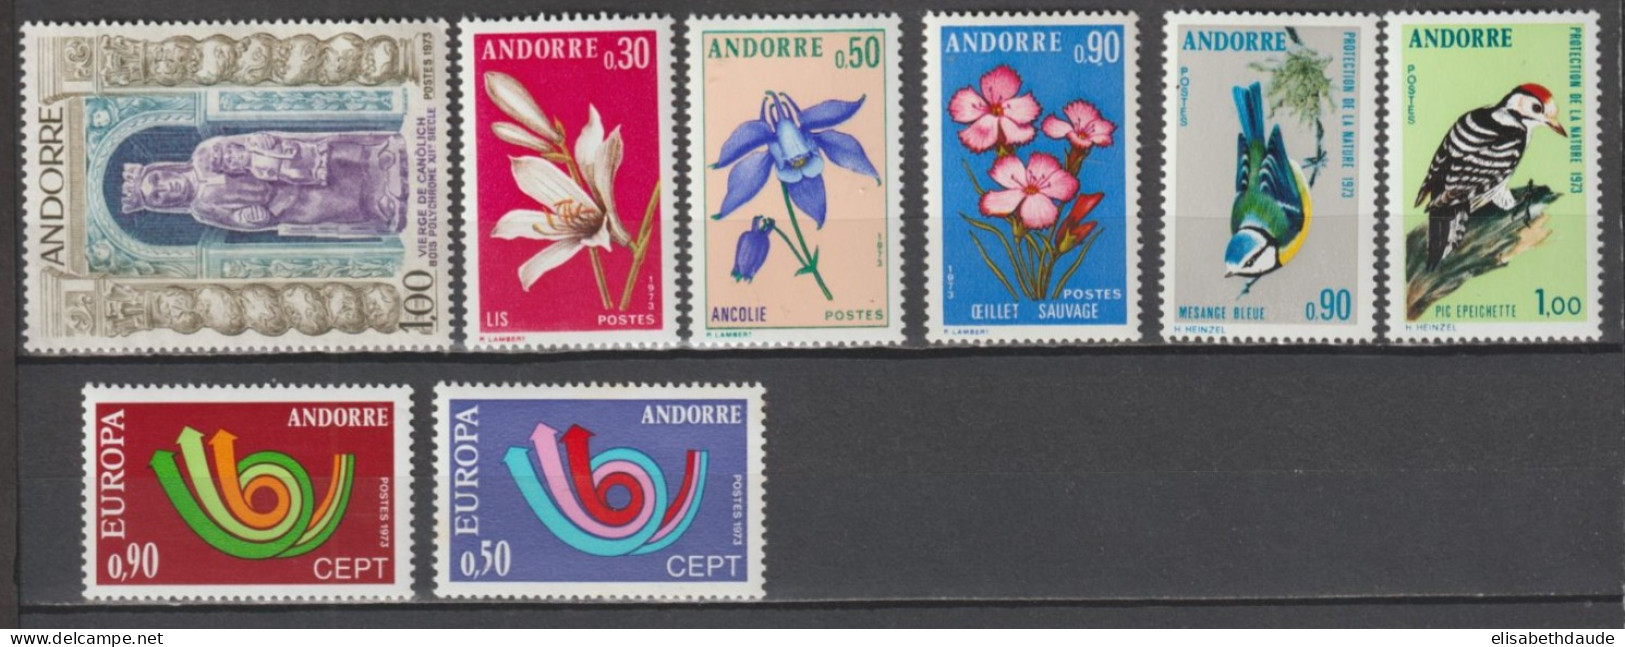 ANDORRE - ANNEE COMPLETE 1973 YVERT N° 226/233 ** MNH - COTE = 51.55 EUR. - - Años Completos